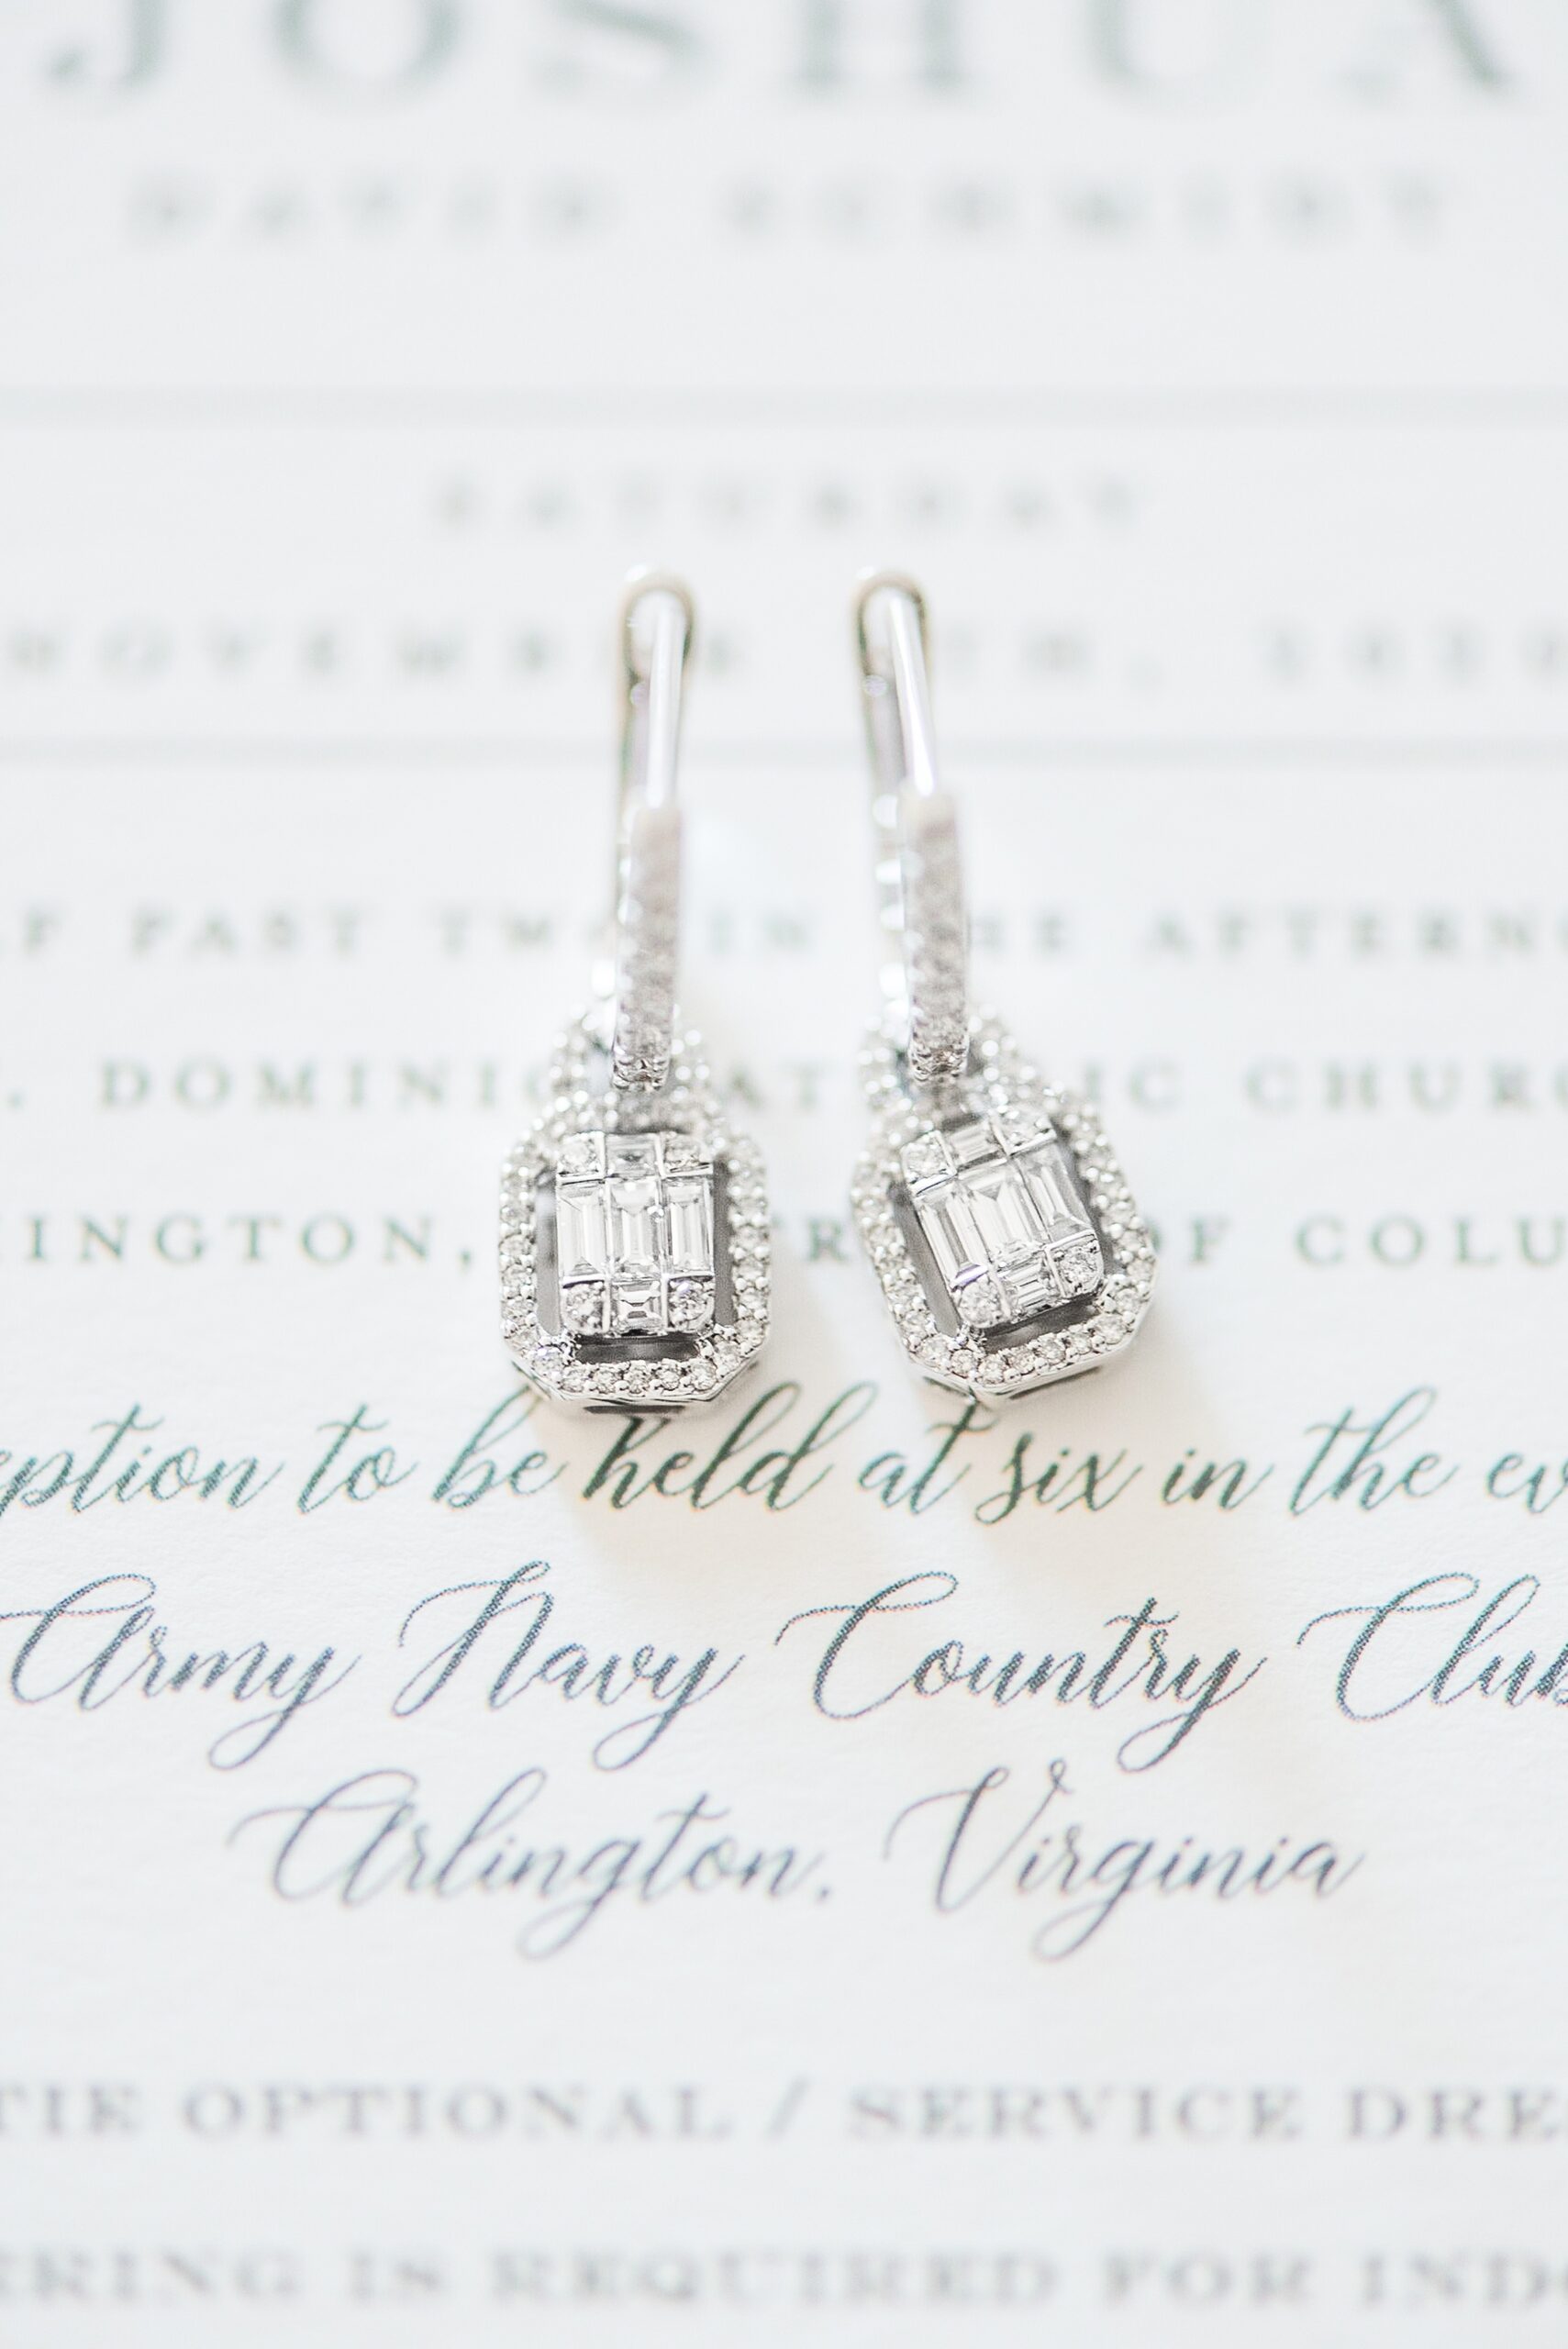 Details of diamond wedding earrings sitting on an invitation for an Army Navy Club Wedding